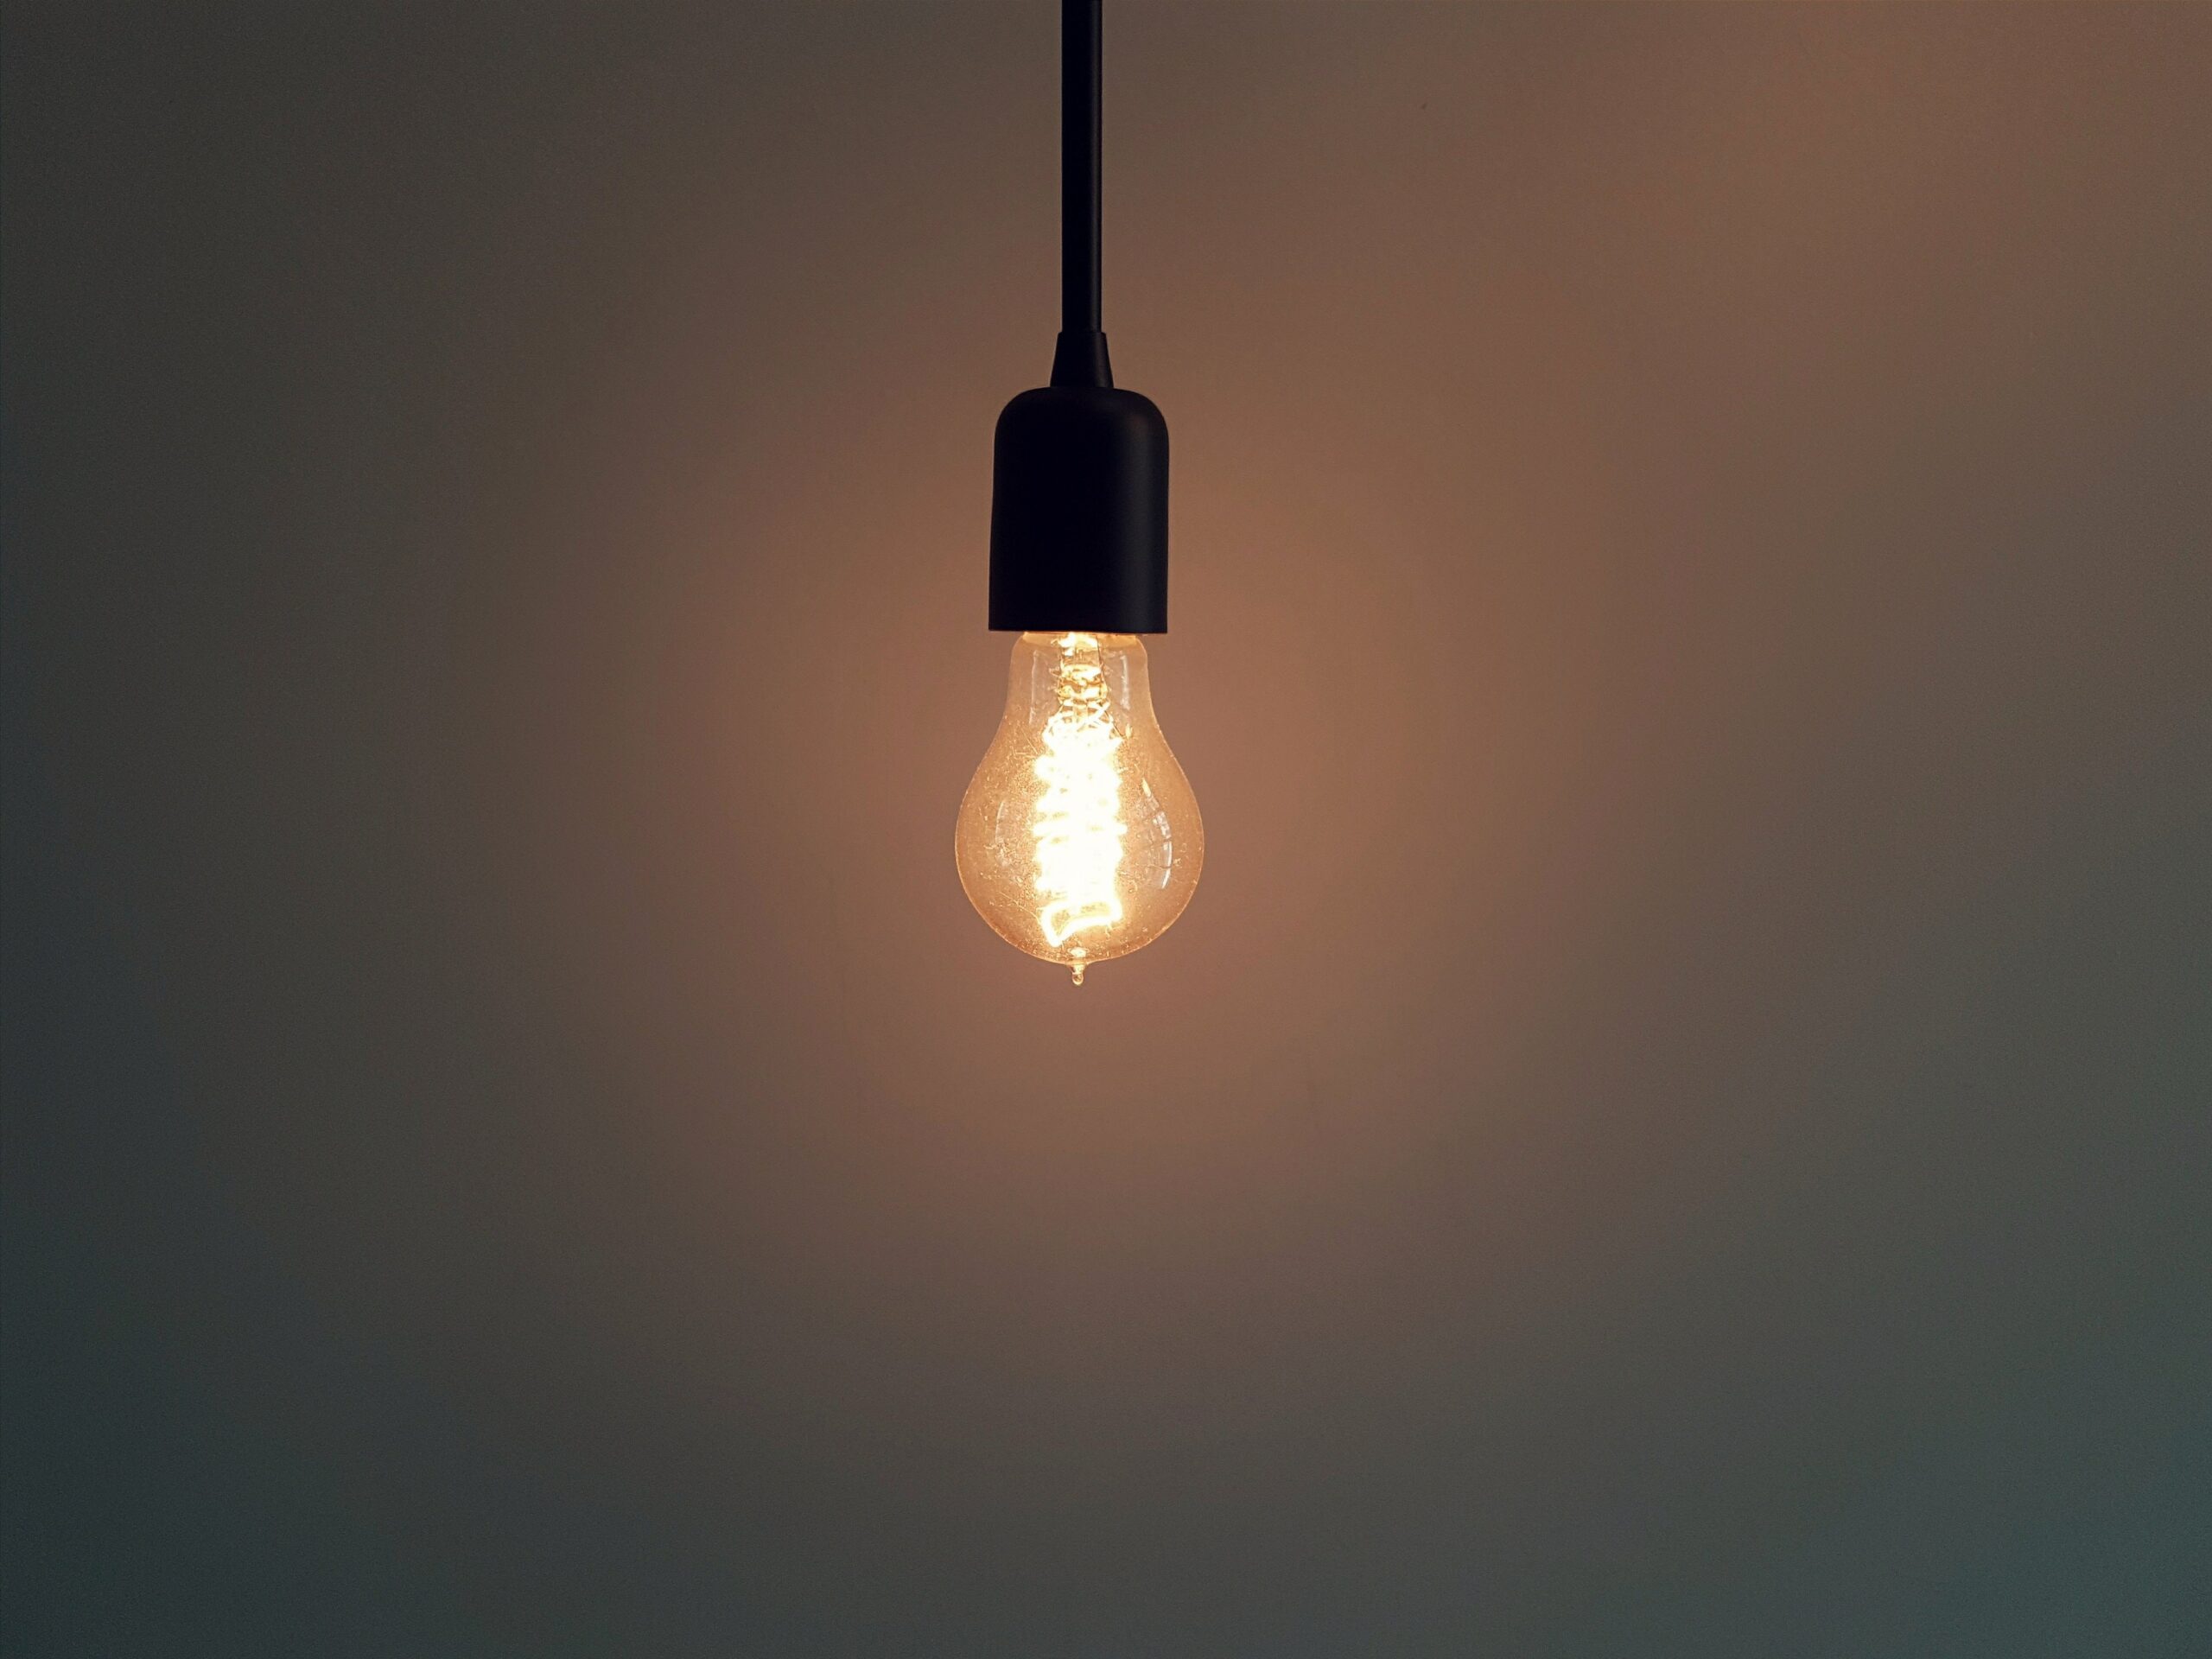 Single light bulb in dim room